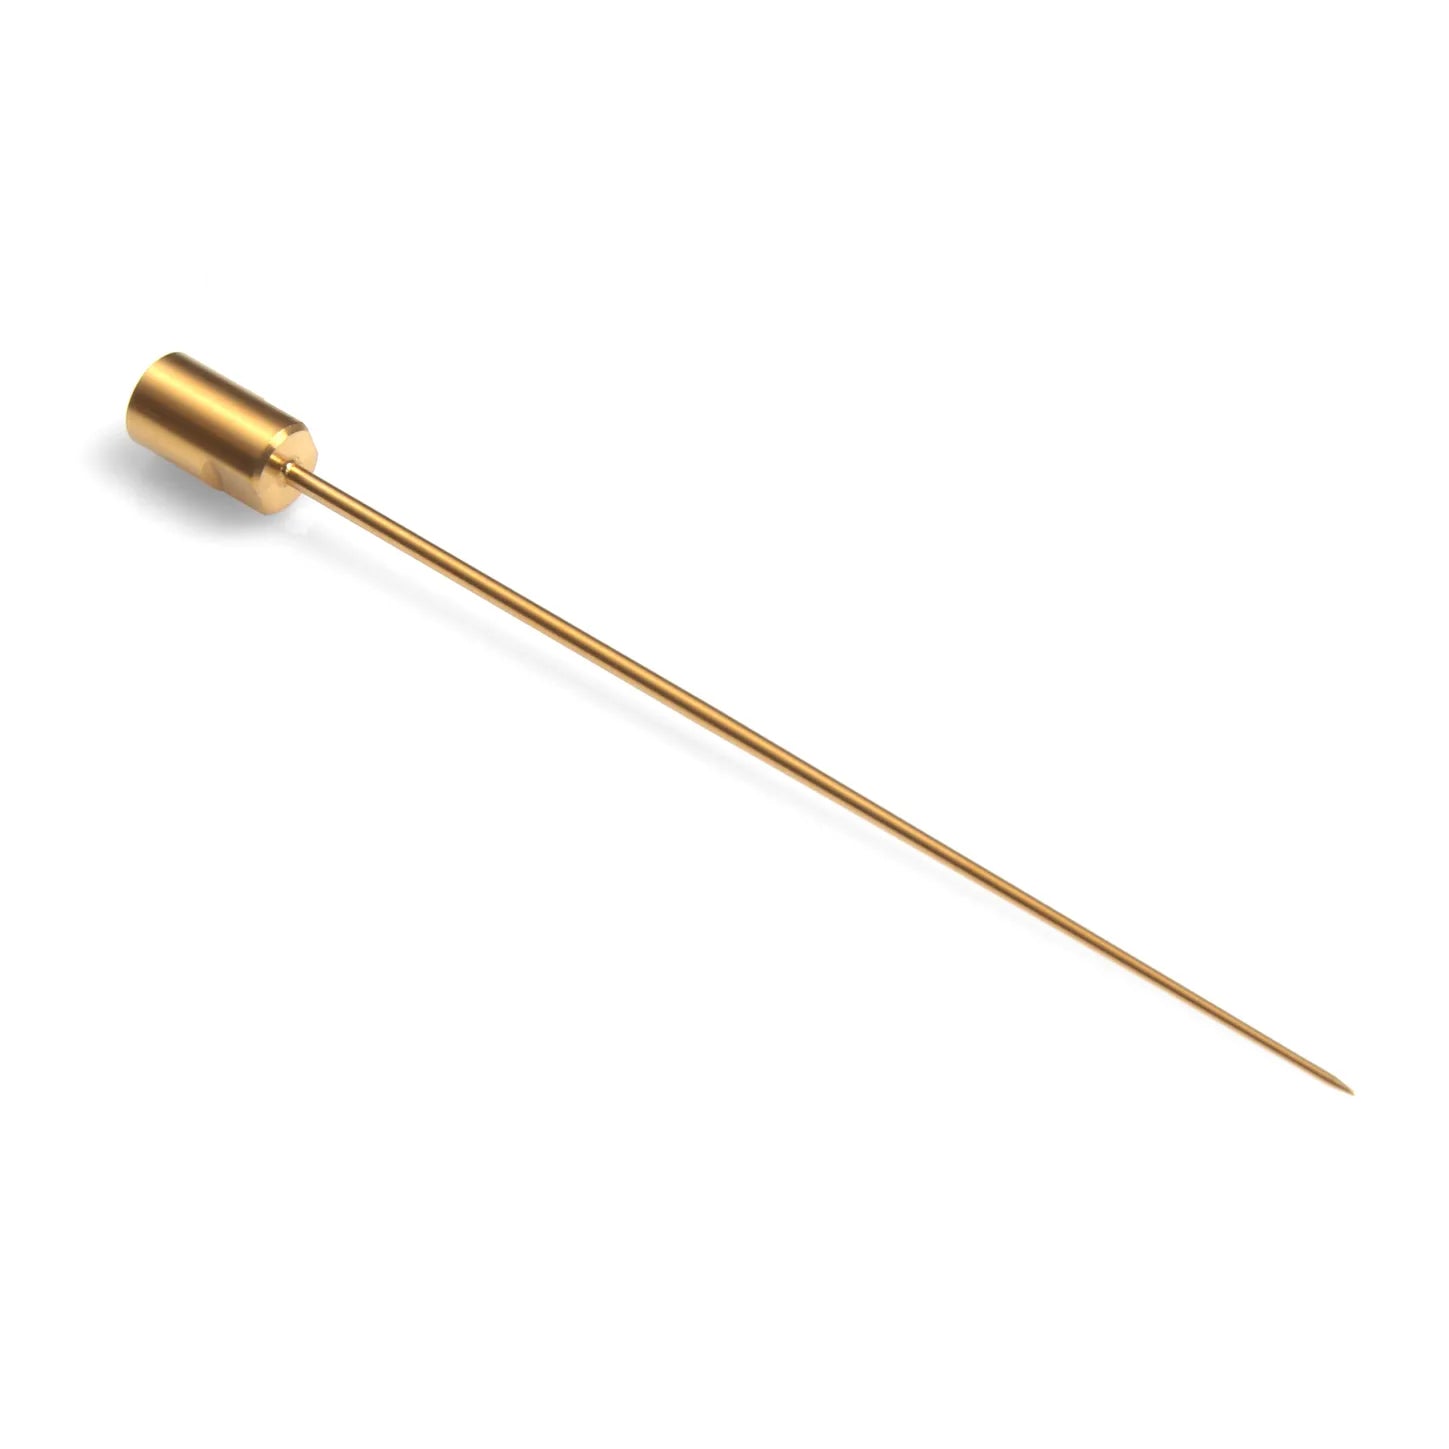 Sample Needle, Viper™, Comparable to Thermo/Dionex # 6820.2432